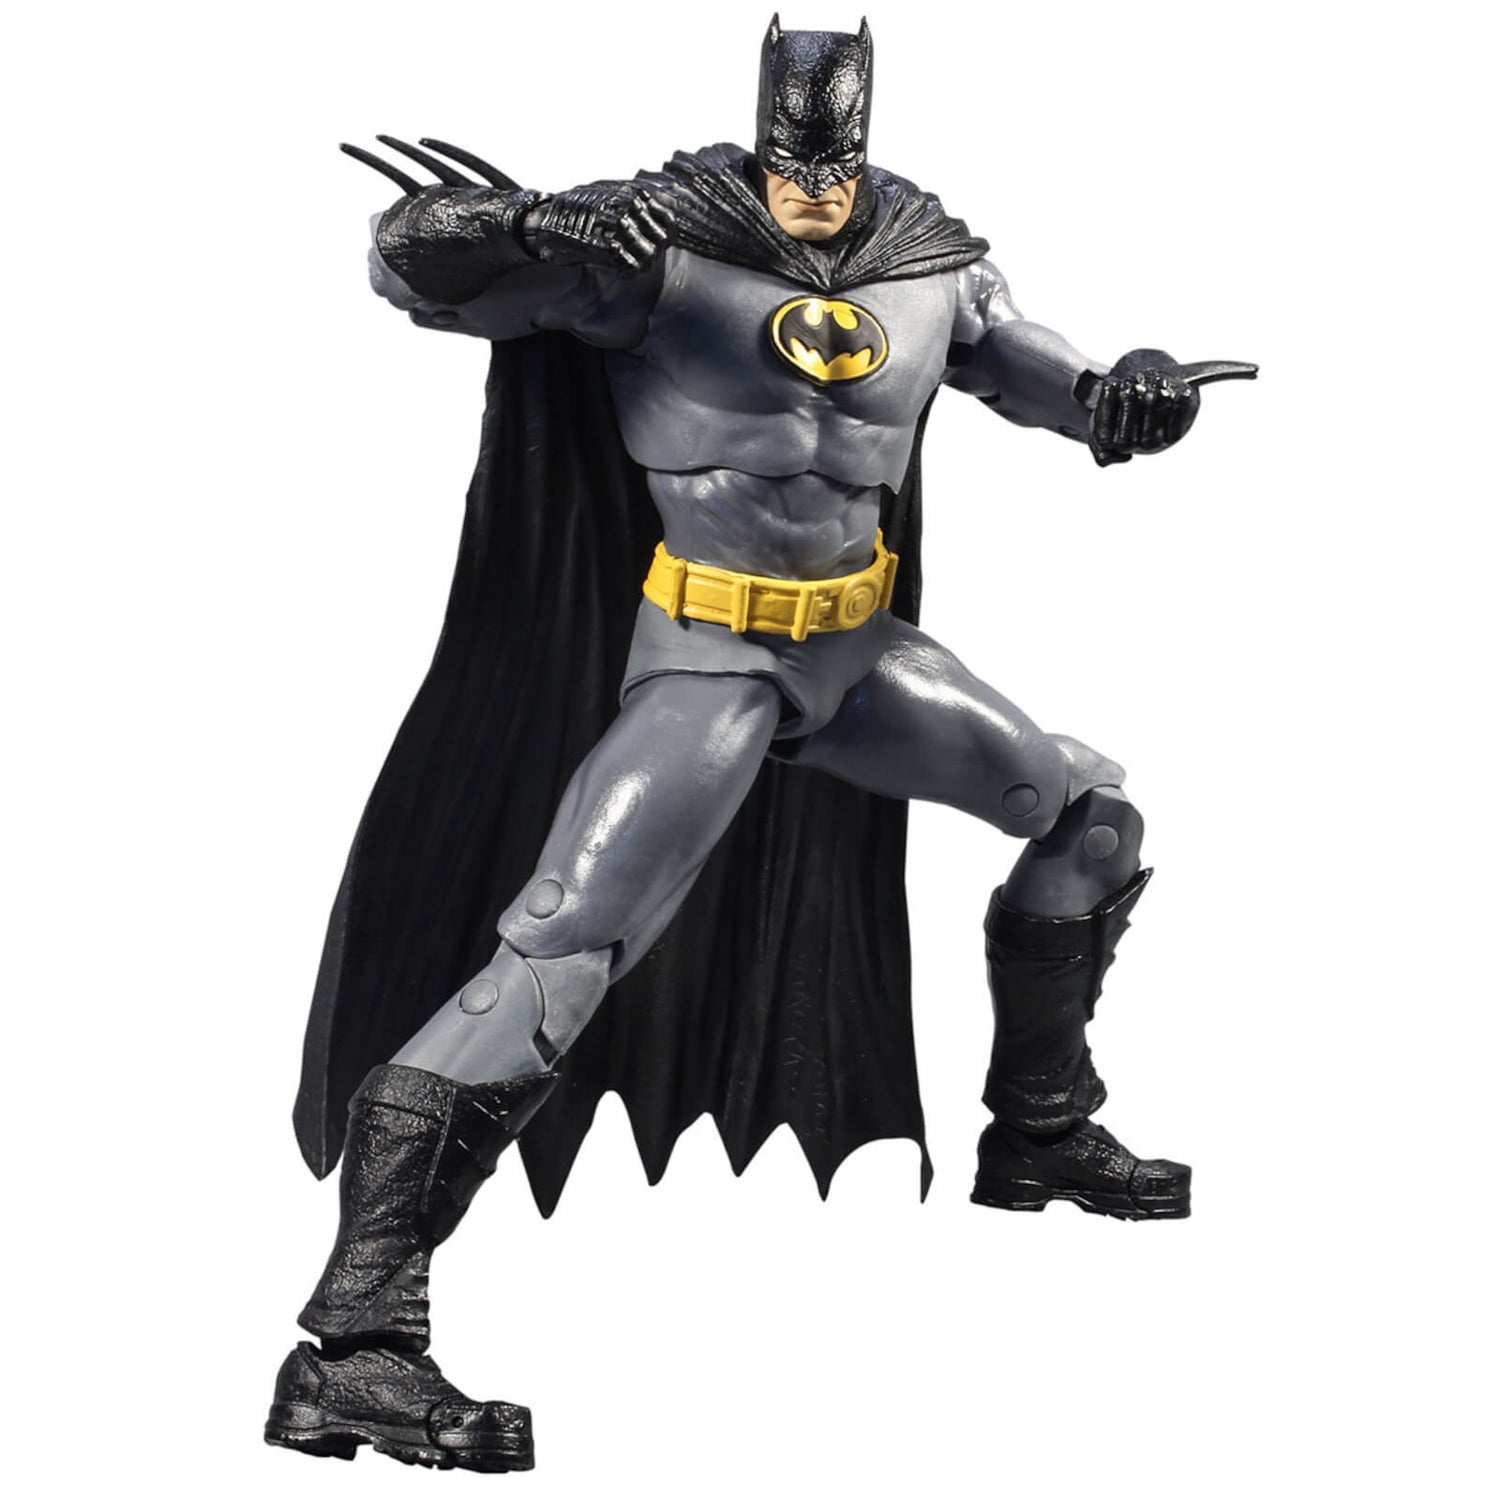 PINATAS PLUS - Justice League Piñata (Batman, Superman, Green Lantern,  Flash) www.facebo…